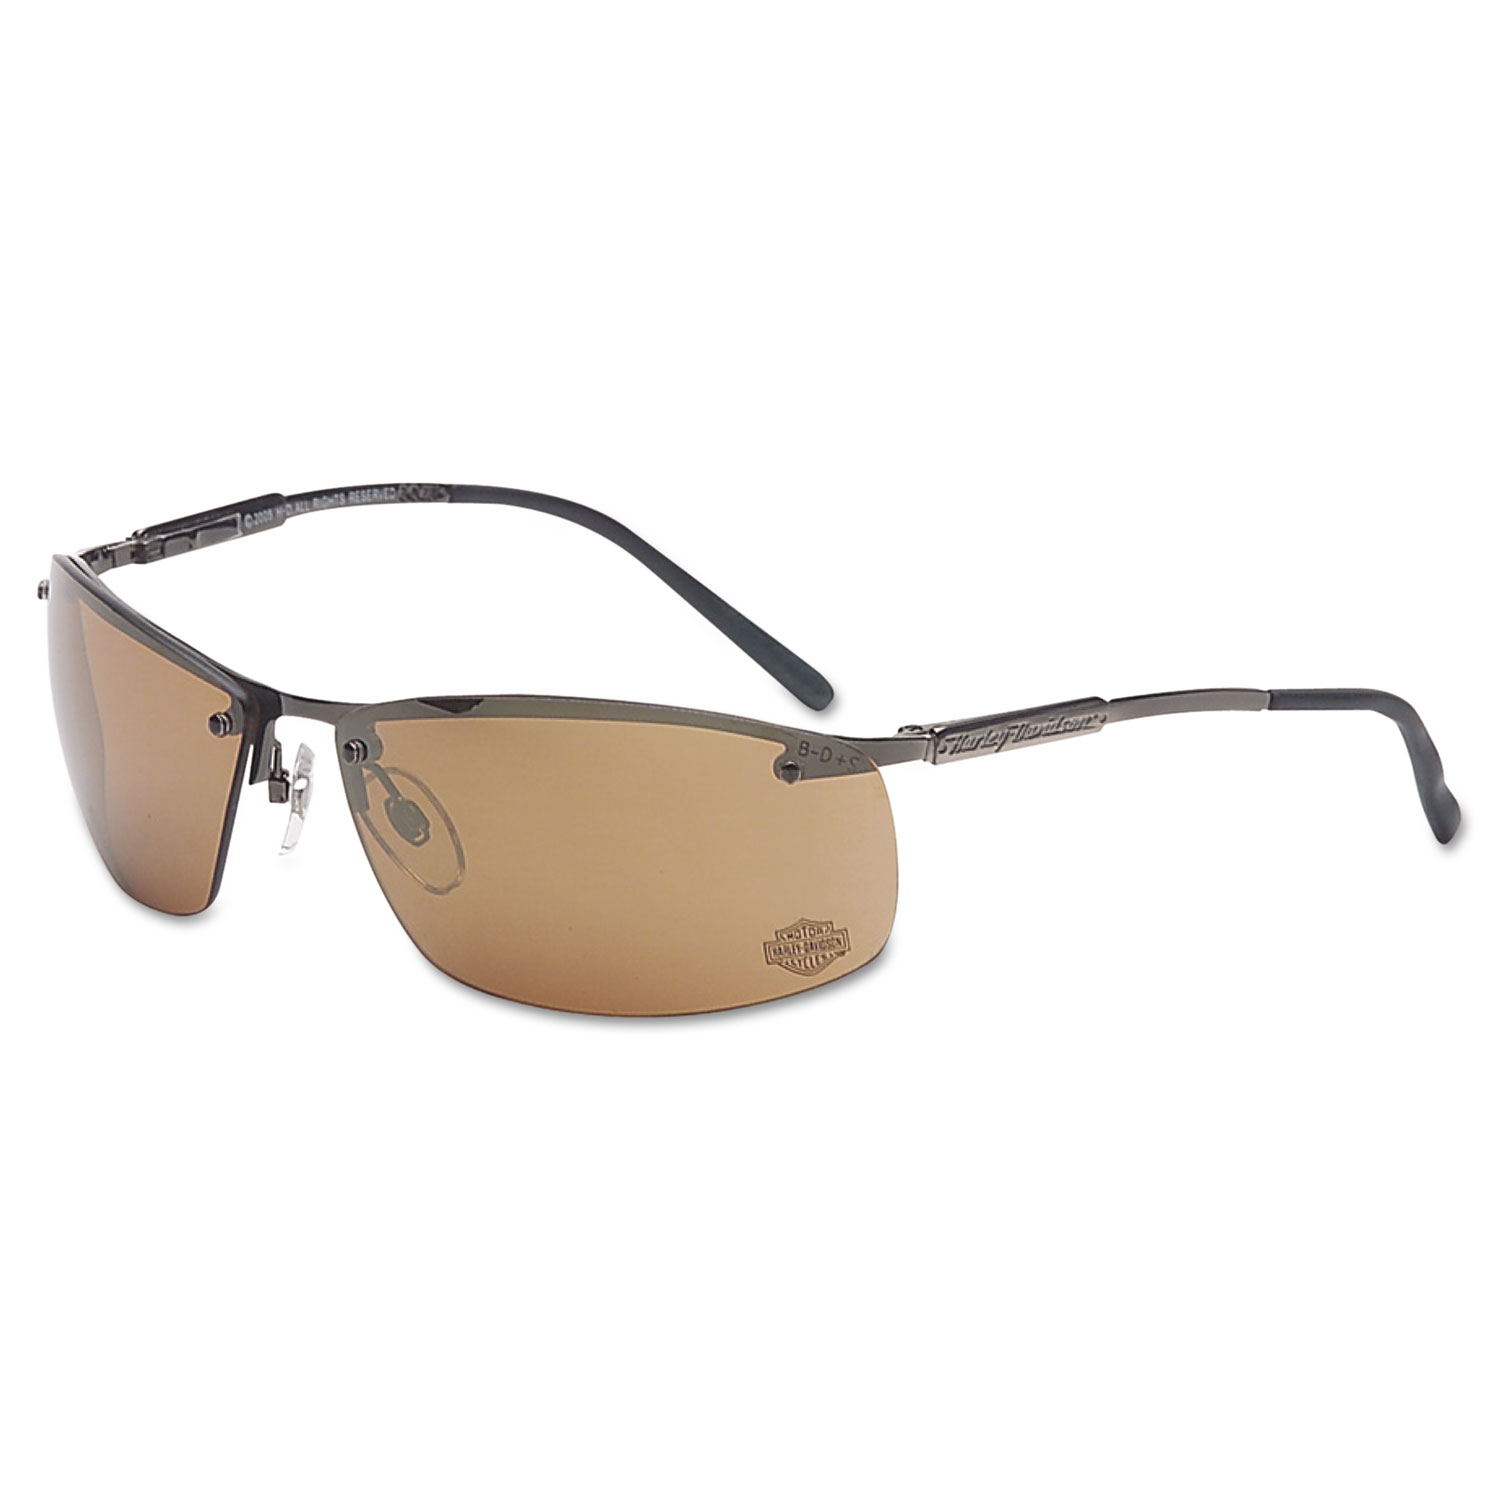 HD 700 Series Safety Glasses, Gunmetal Frame, Brown Mirror Lens